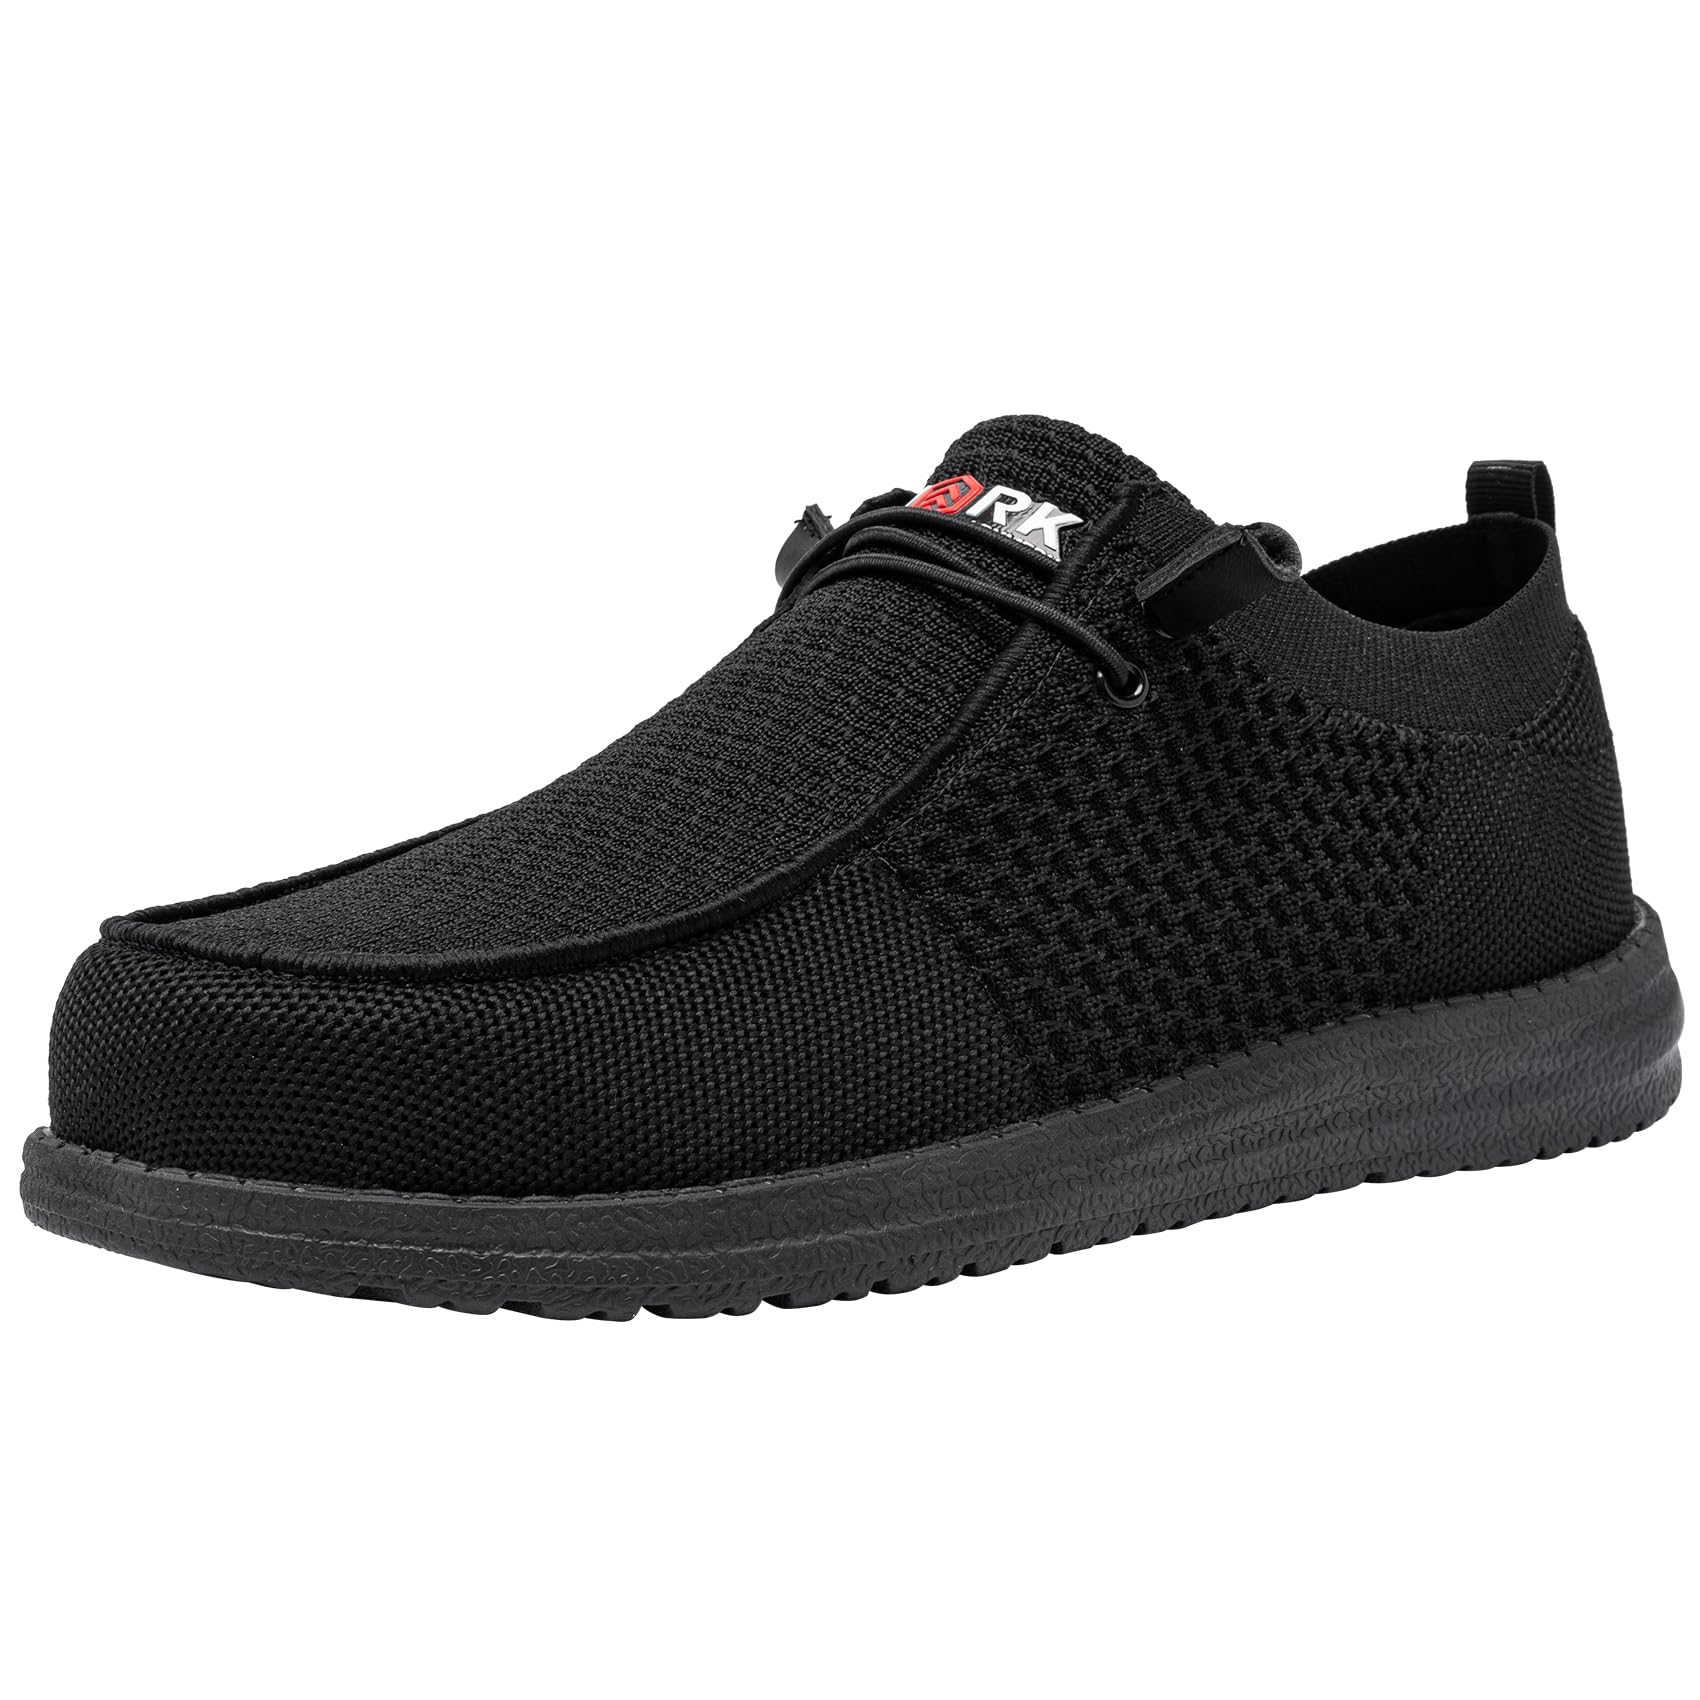 LARNMERN Slip On Steel Toe Shoes Men Lightweight Comfortable Lounging Walking Sneakers Steel Toe Loafers